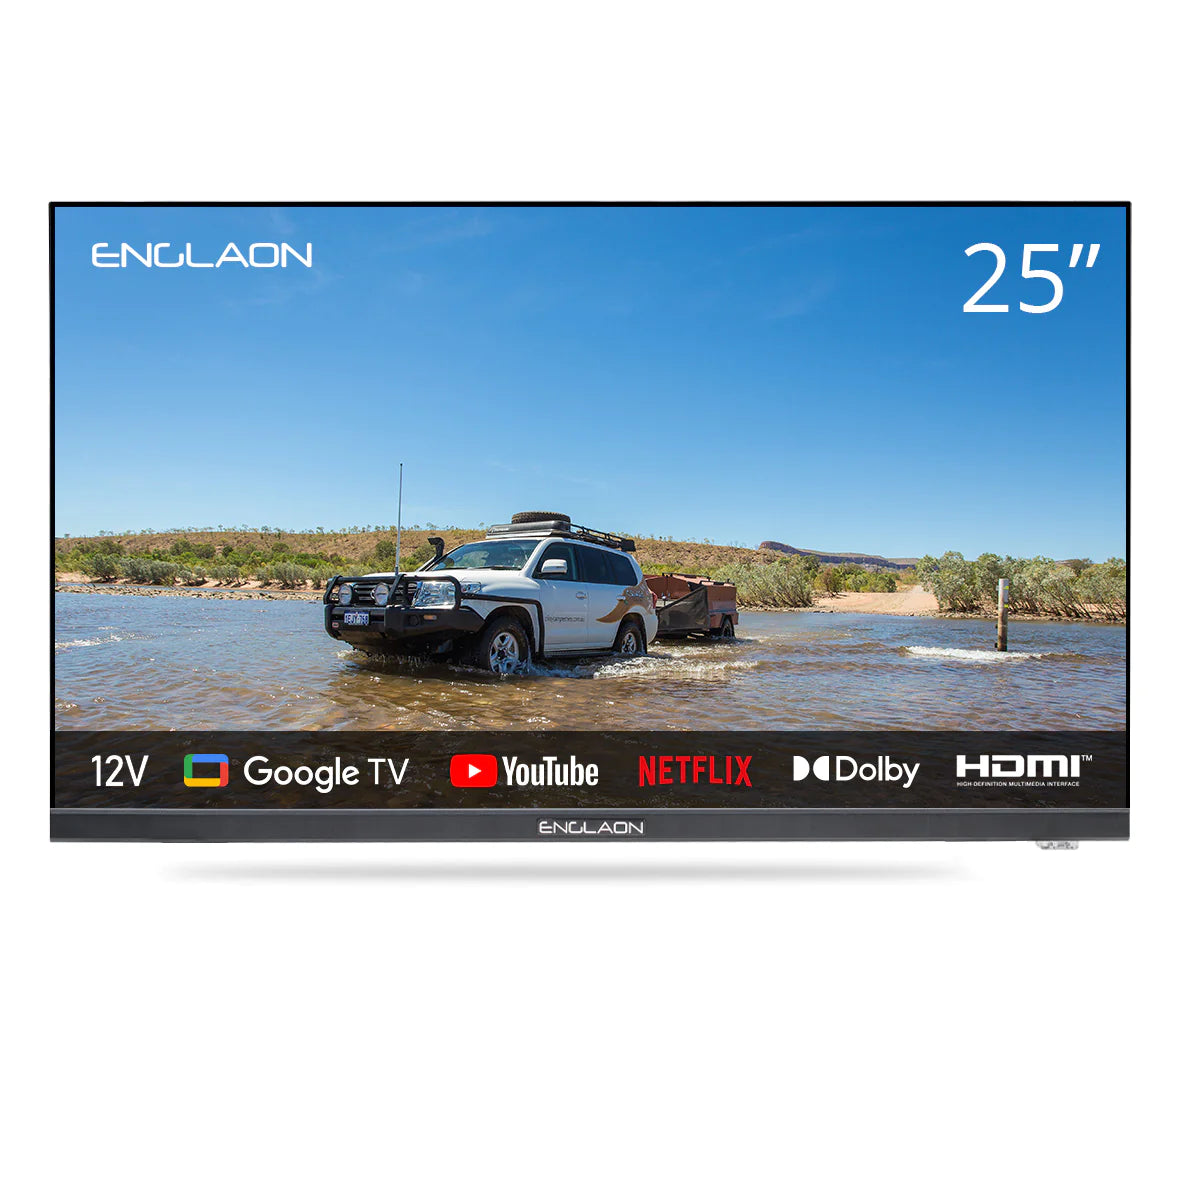 ENGLAON 32″ HD Android Smart LED 12V TV with Chromecast